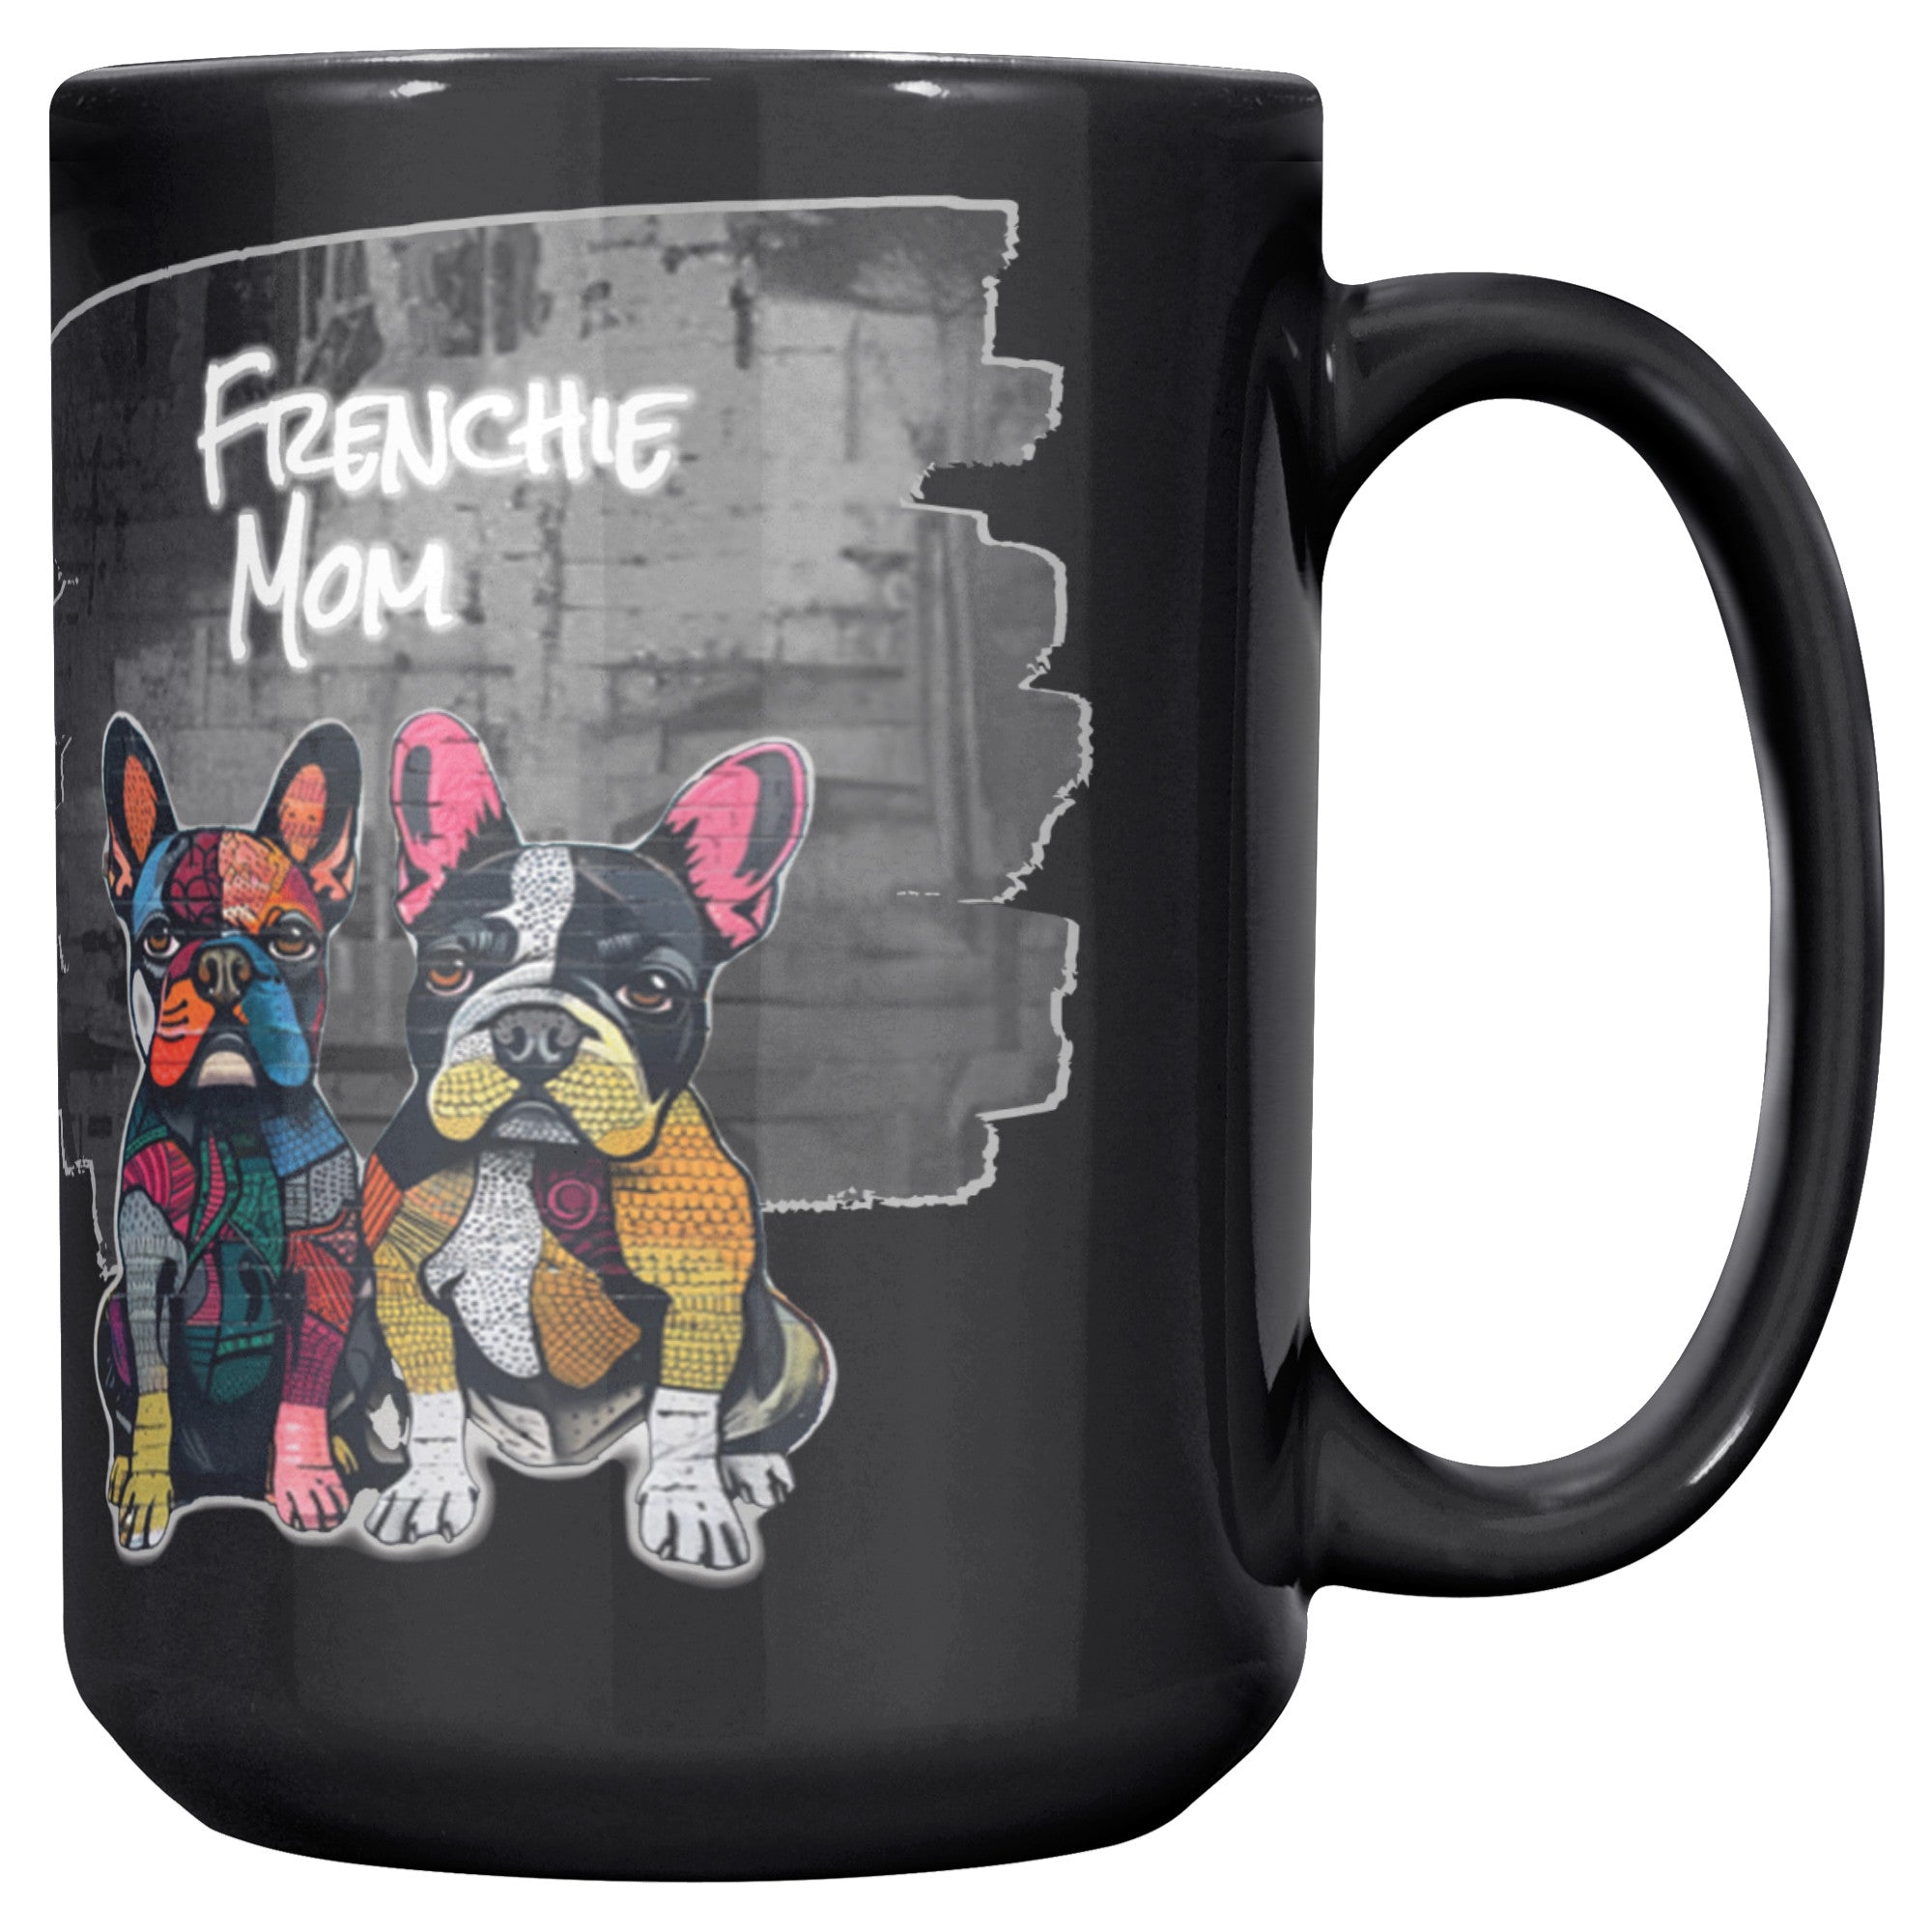 Original Frenchie Mom Graffiti Dog Art Edgy Black Mug - original-frenchie-street-art-graffiti-black-mug